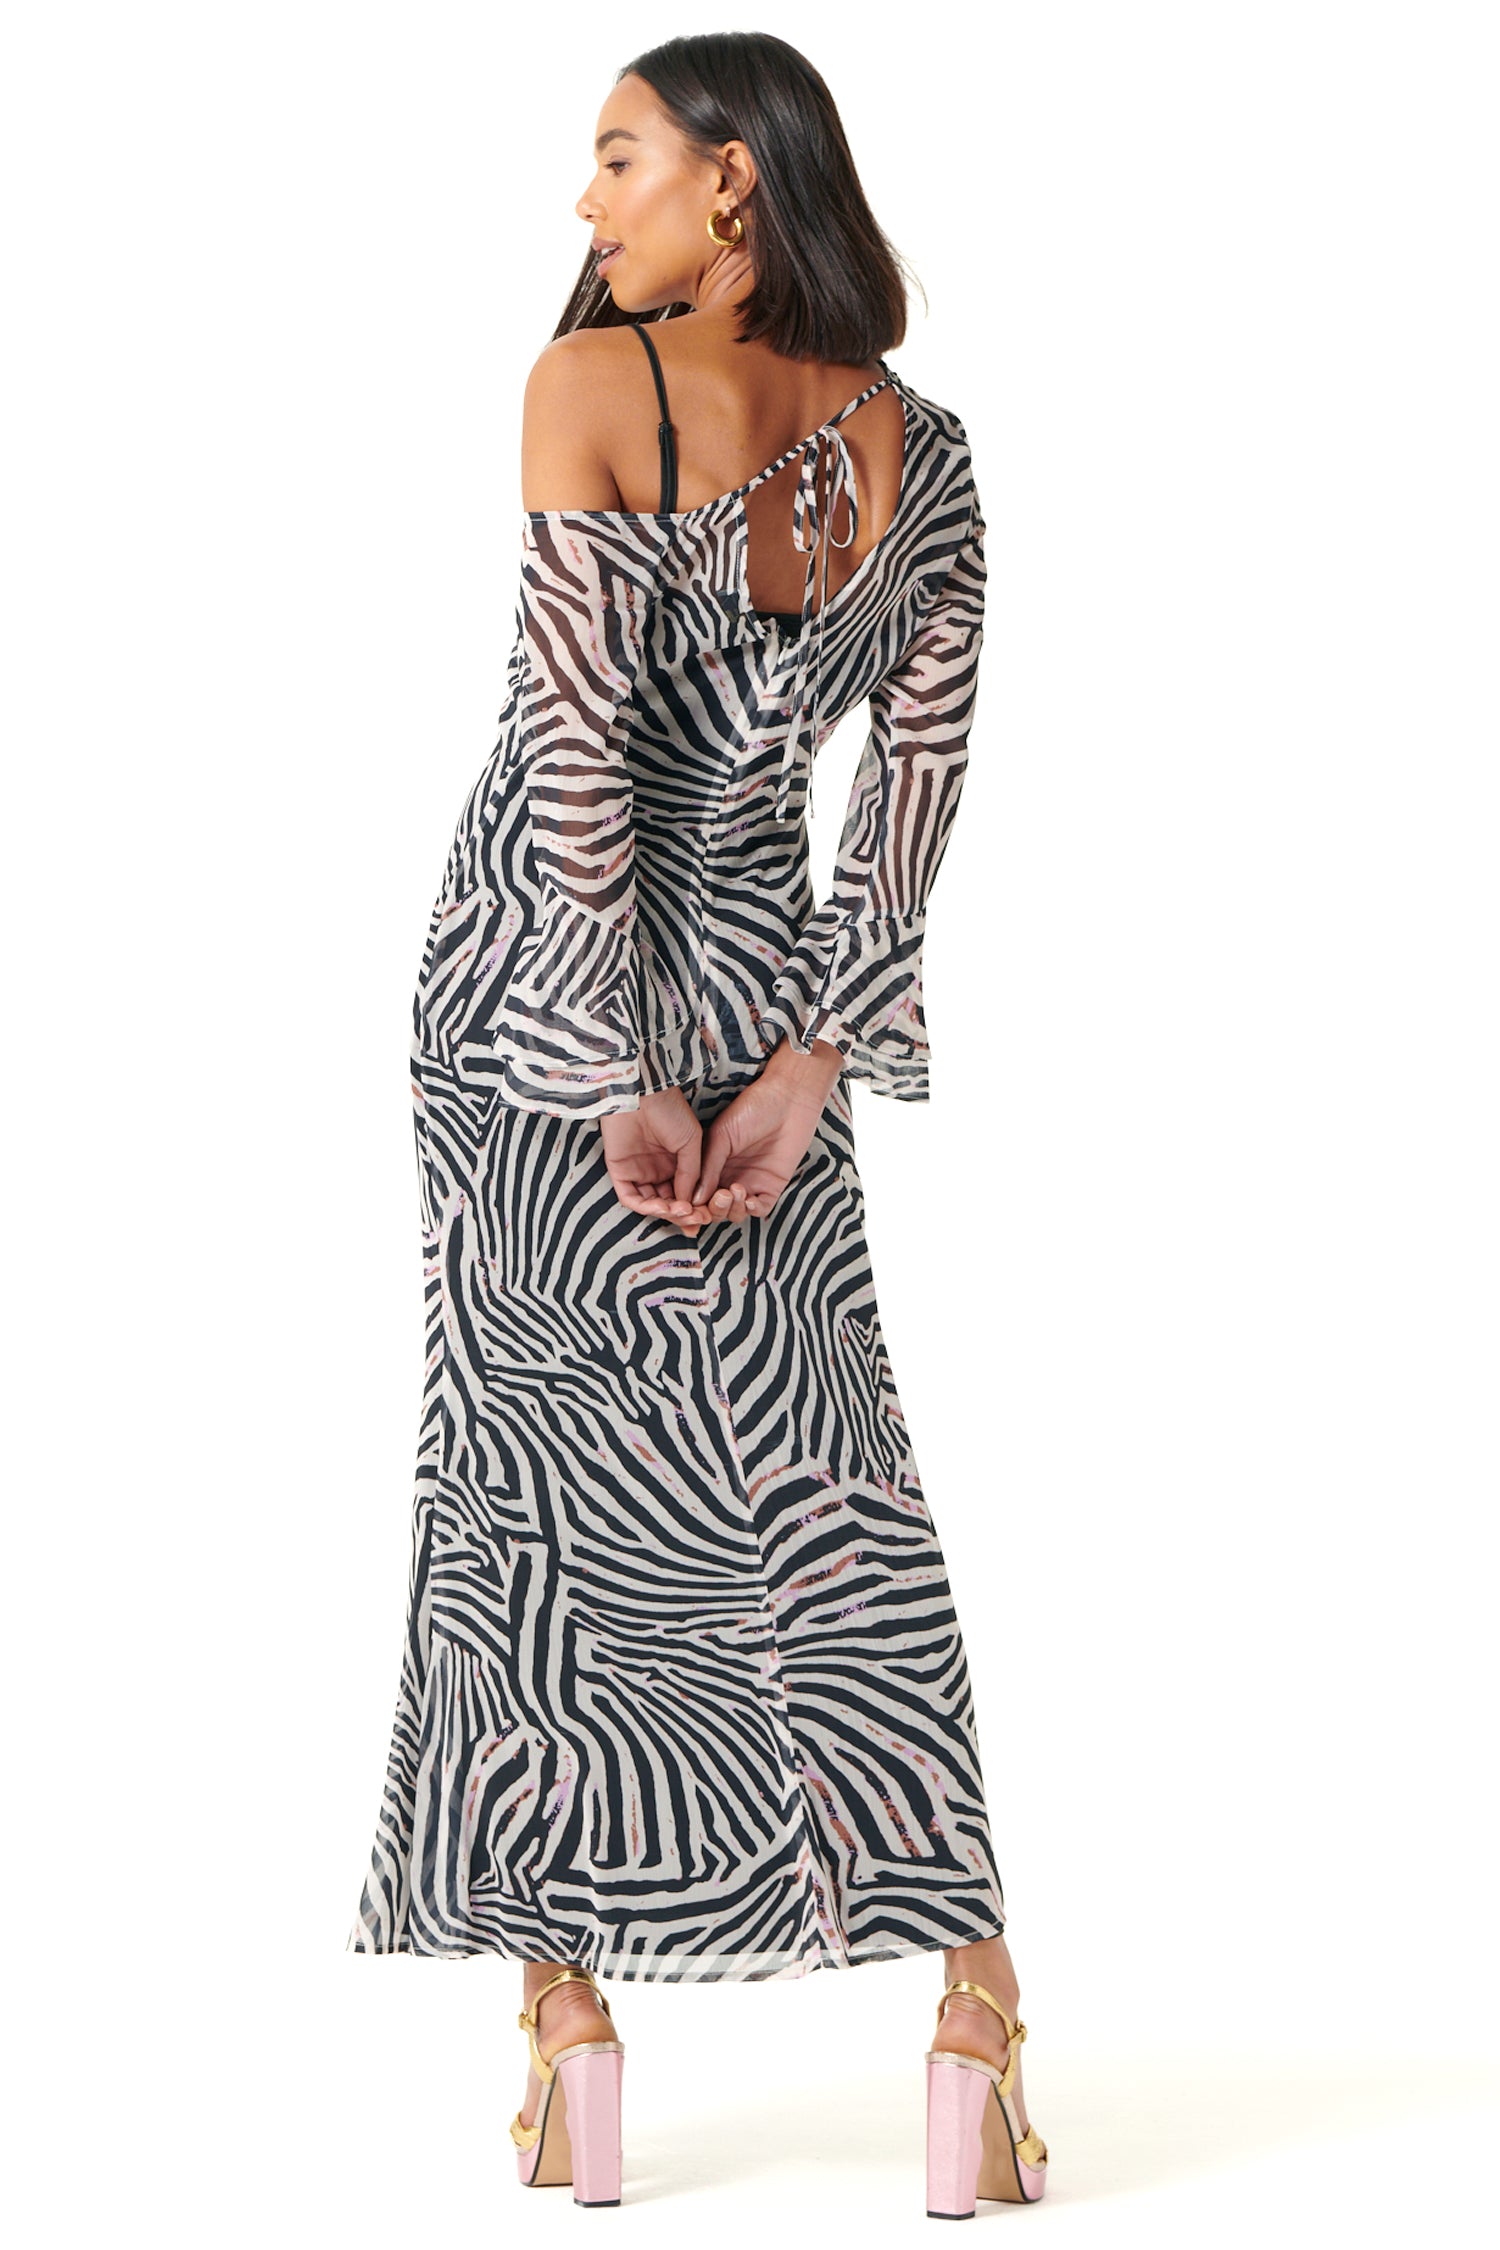 Model wearing Zebra Ophelia Dress standing facing away from the camera